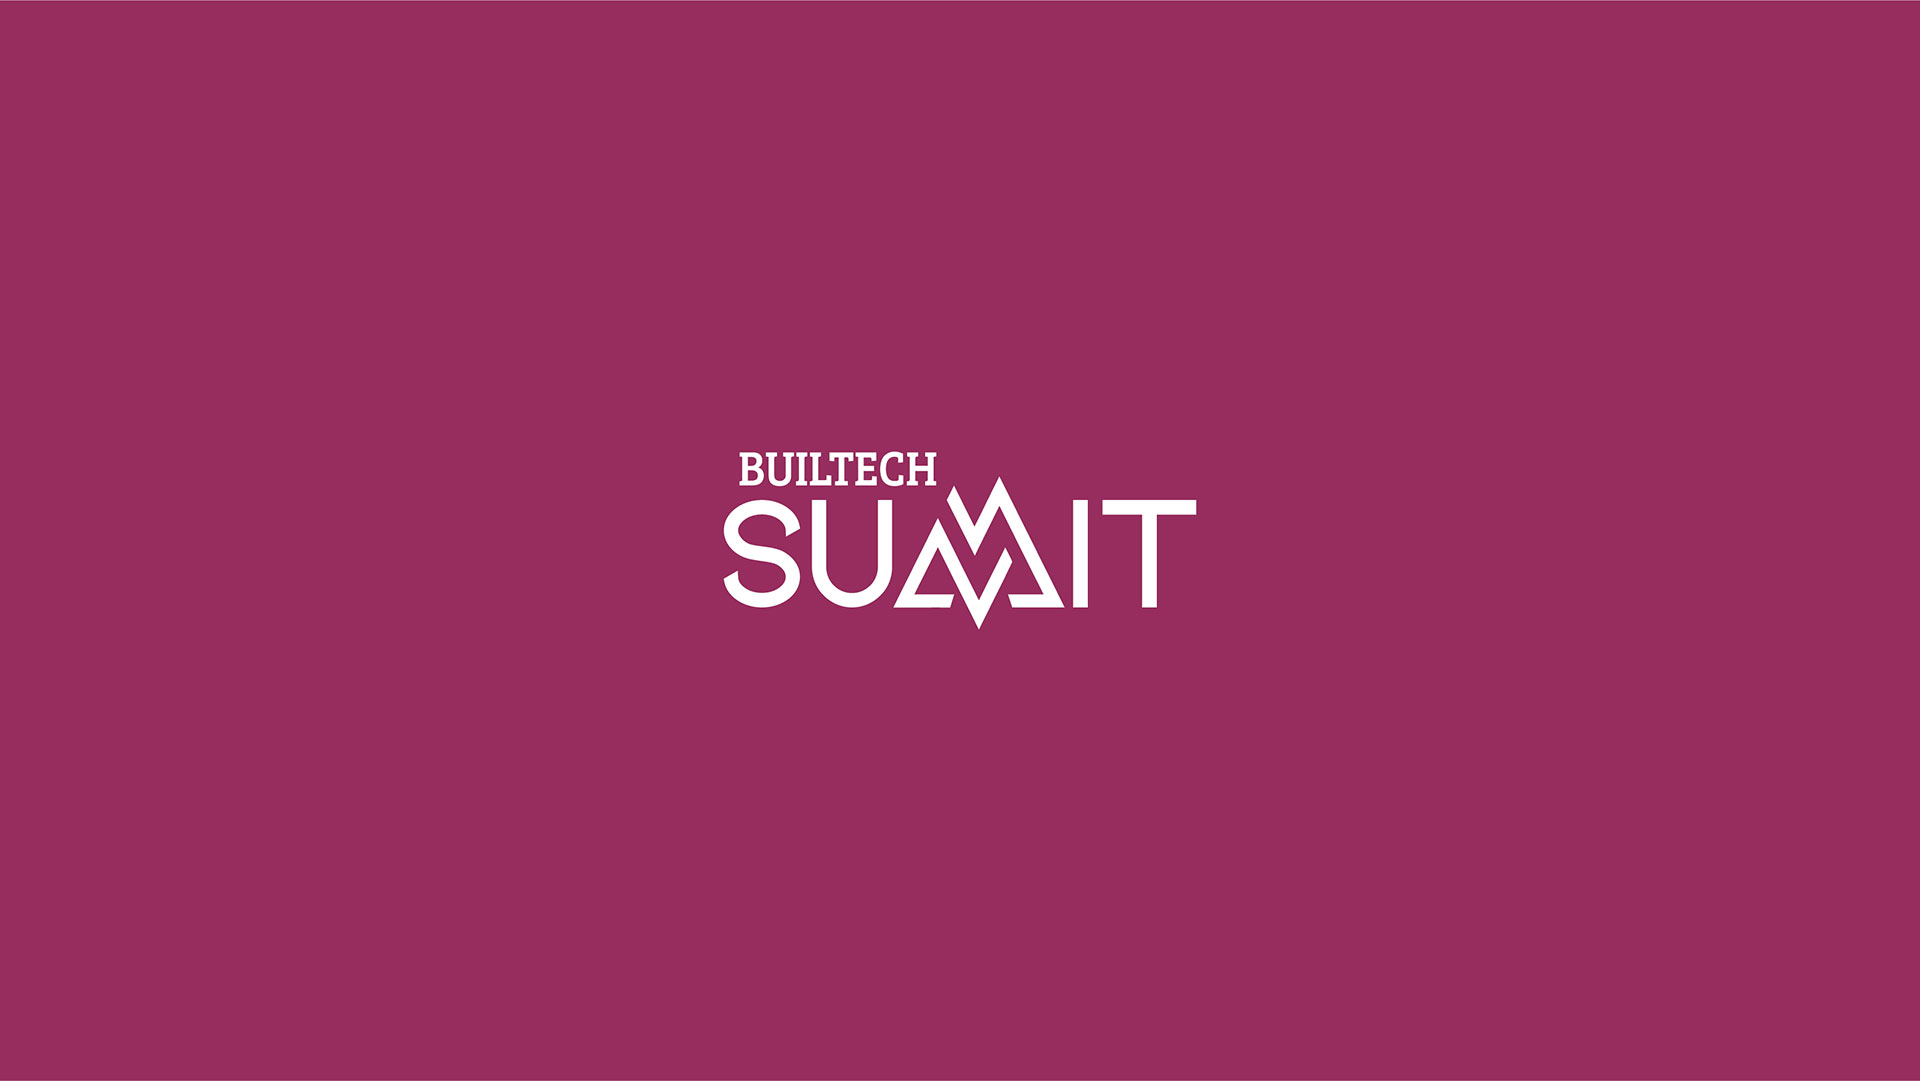 Builtech Summit Logo Design